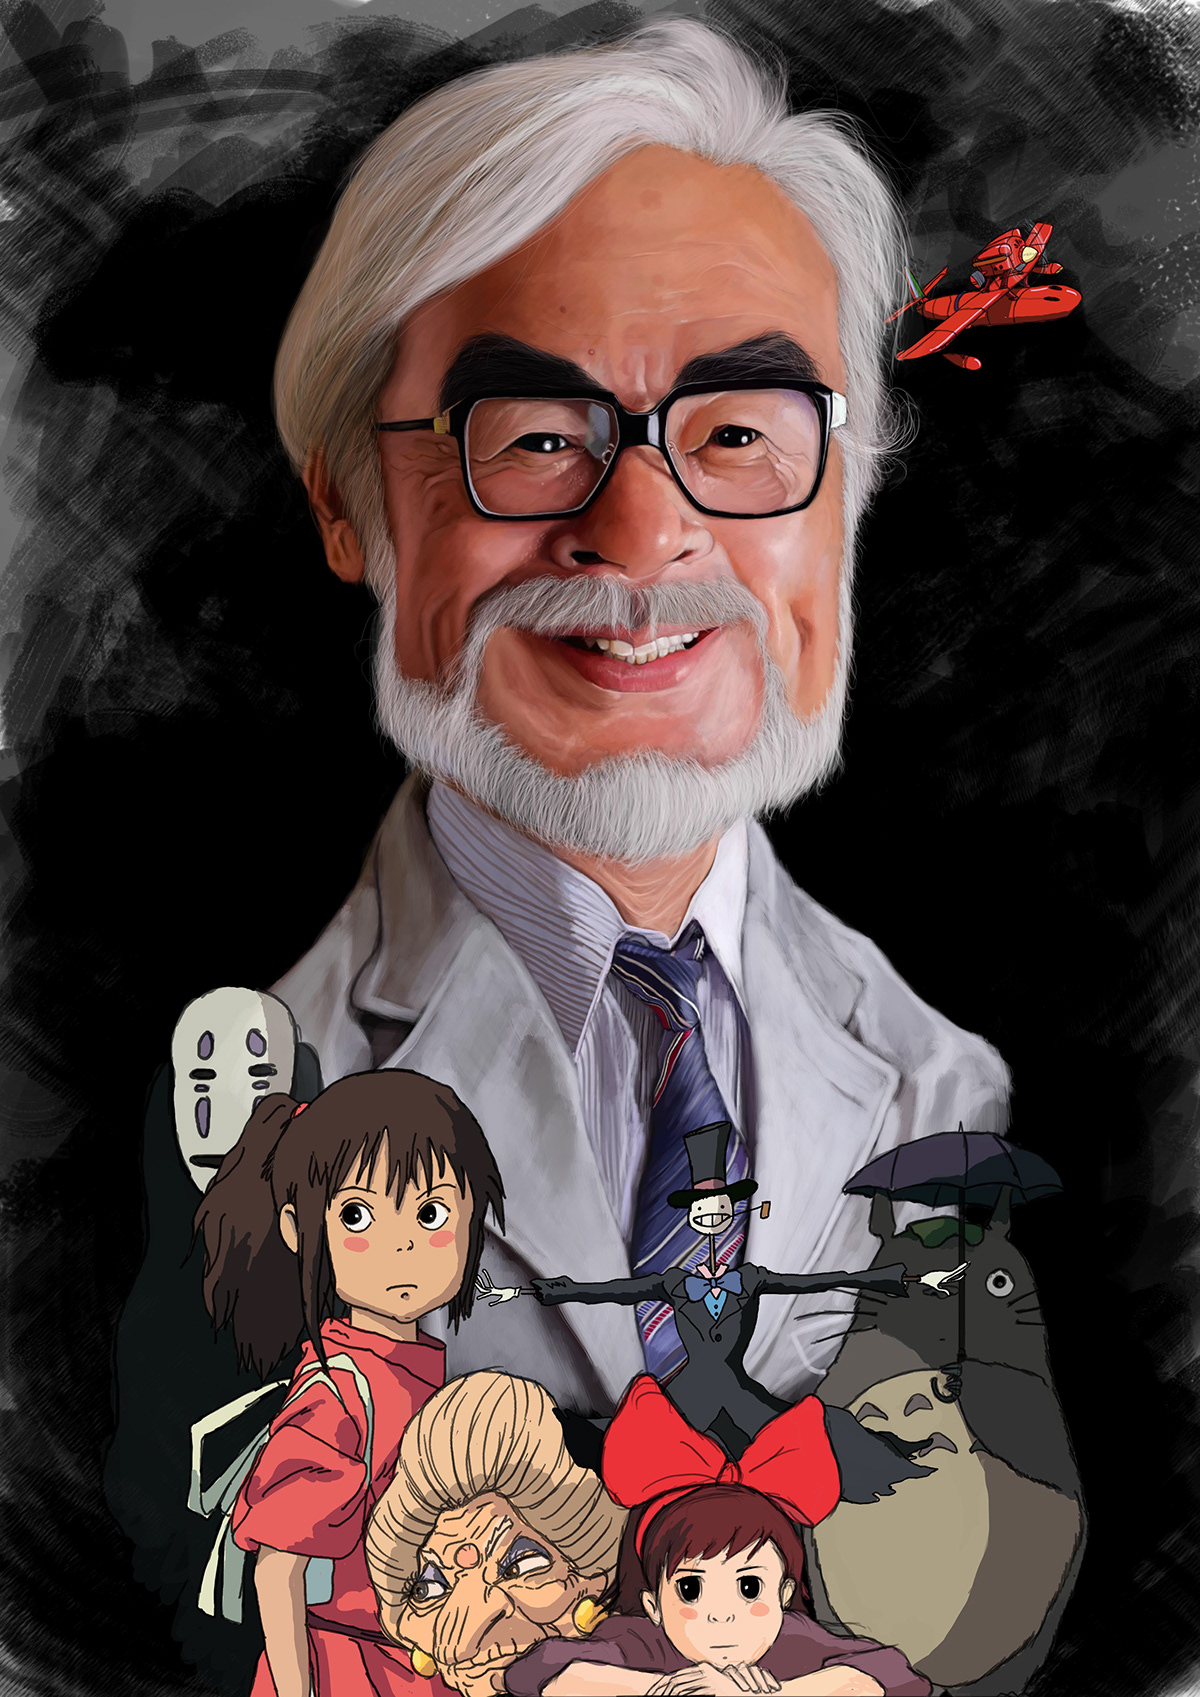 Hayao Miyazaki hayao miyazaki anime Jaban kiki's delivery service my neighbor totoro totoro Spirited Away Chihiro howl's moving castle porco rosso Movies posters Ps25Under25